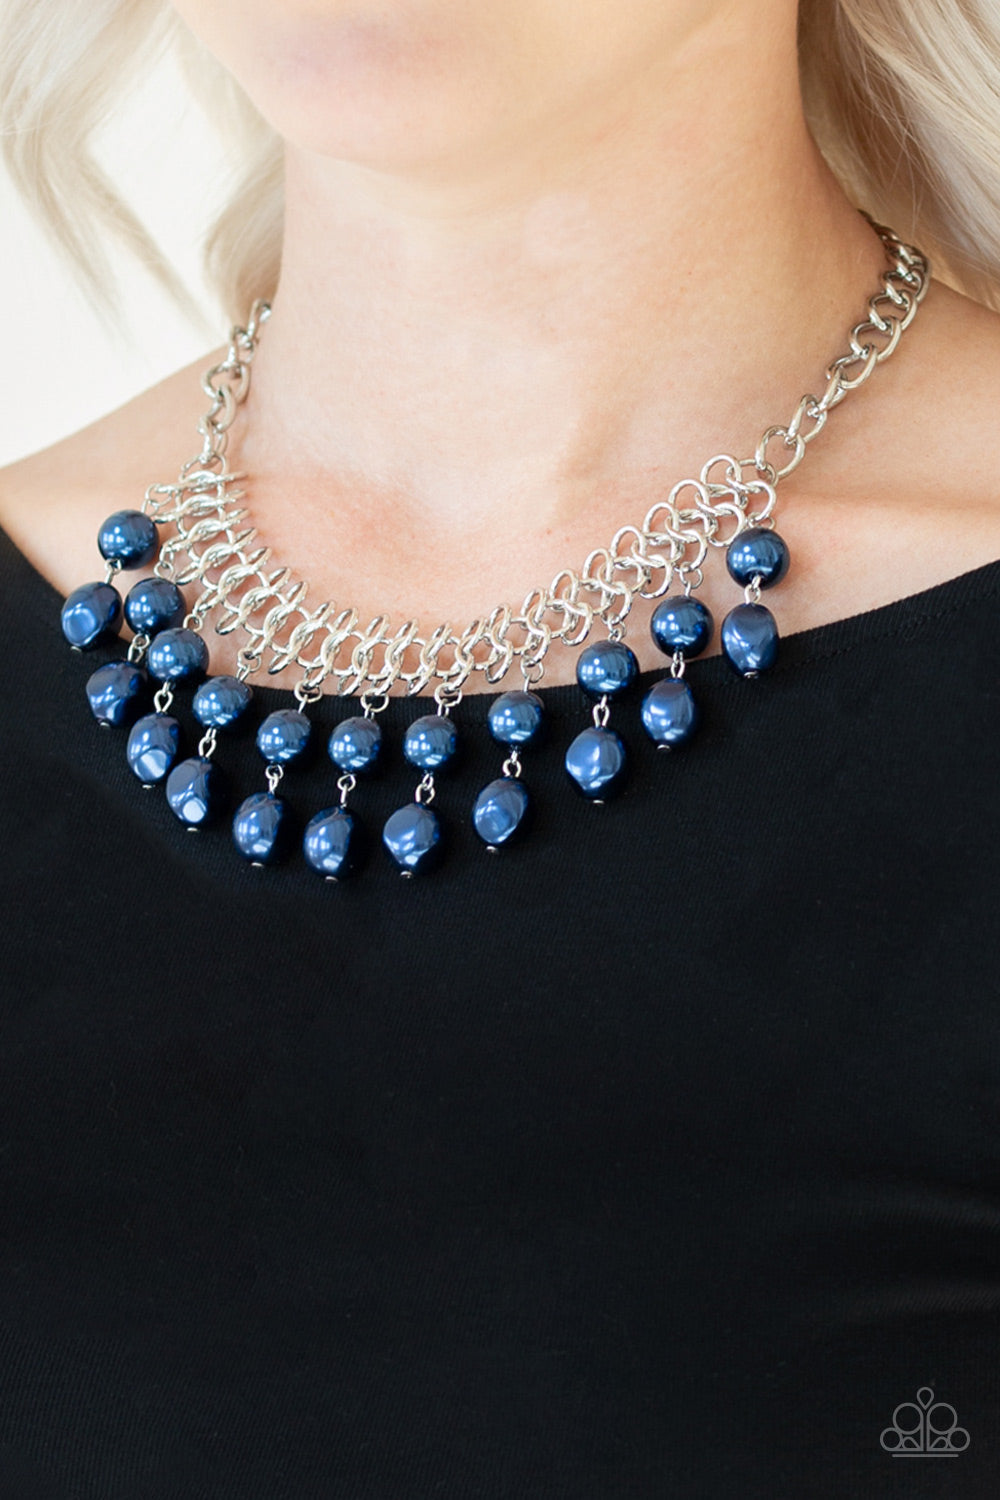 Paparazzi 5th Avenue Fleek - Blue - Pearls - Silver Chain Necklace & Earrings - $5 Jewelry with Ashley Swint